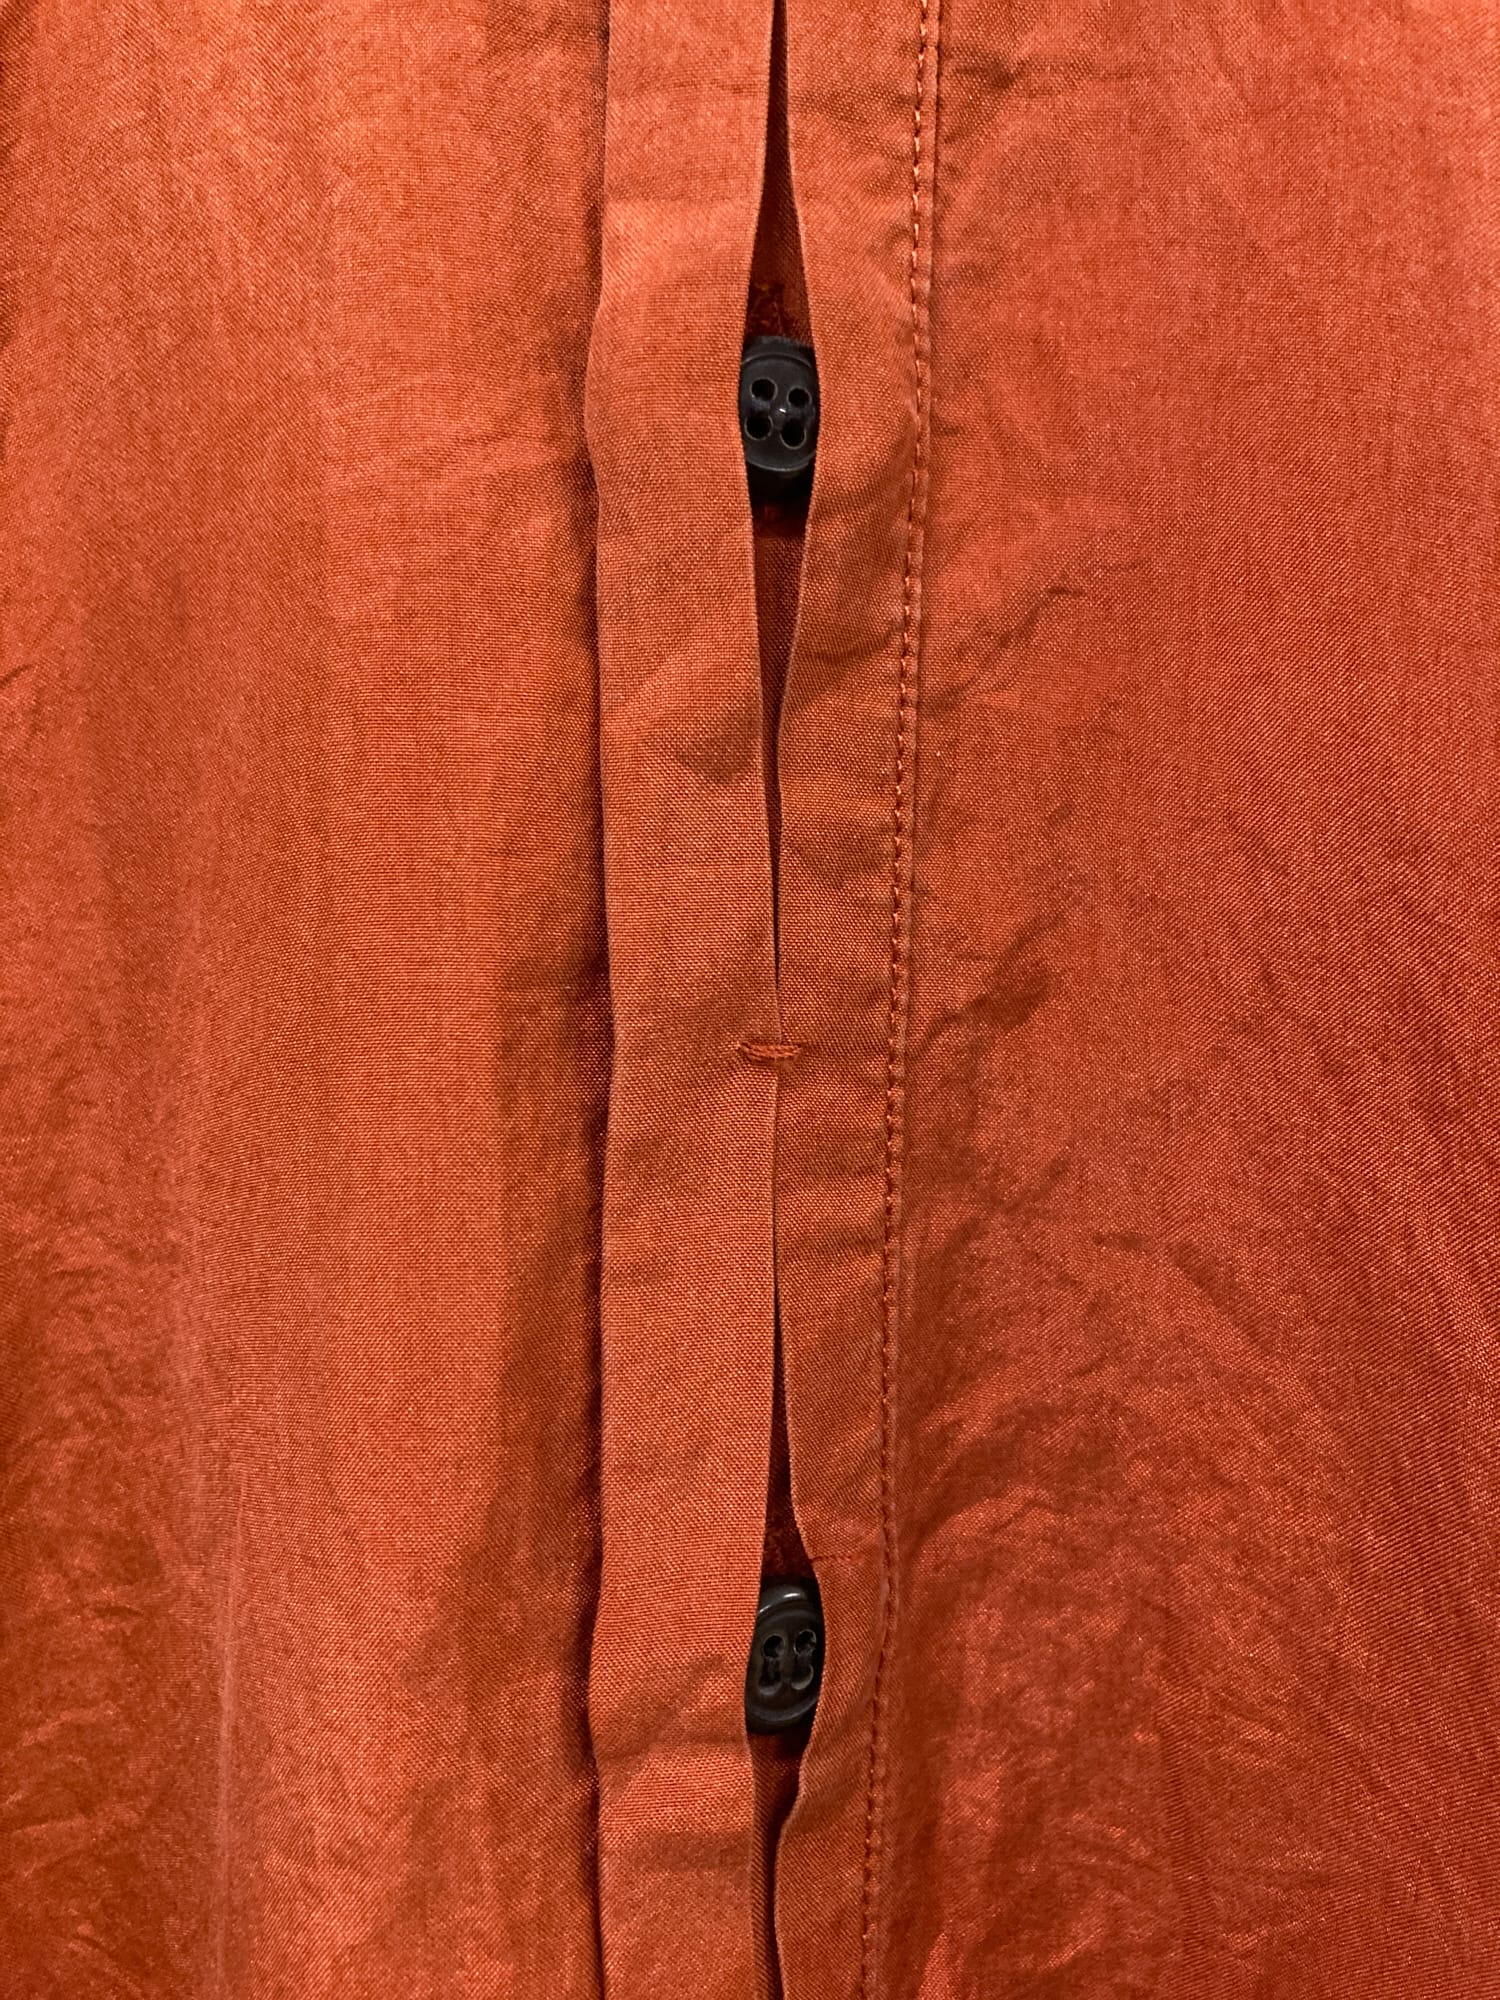 Giuliano Fujiwara burnt orange creased silk shirt - size 48